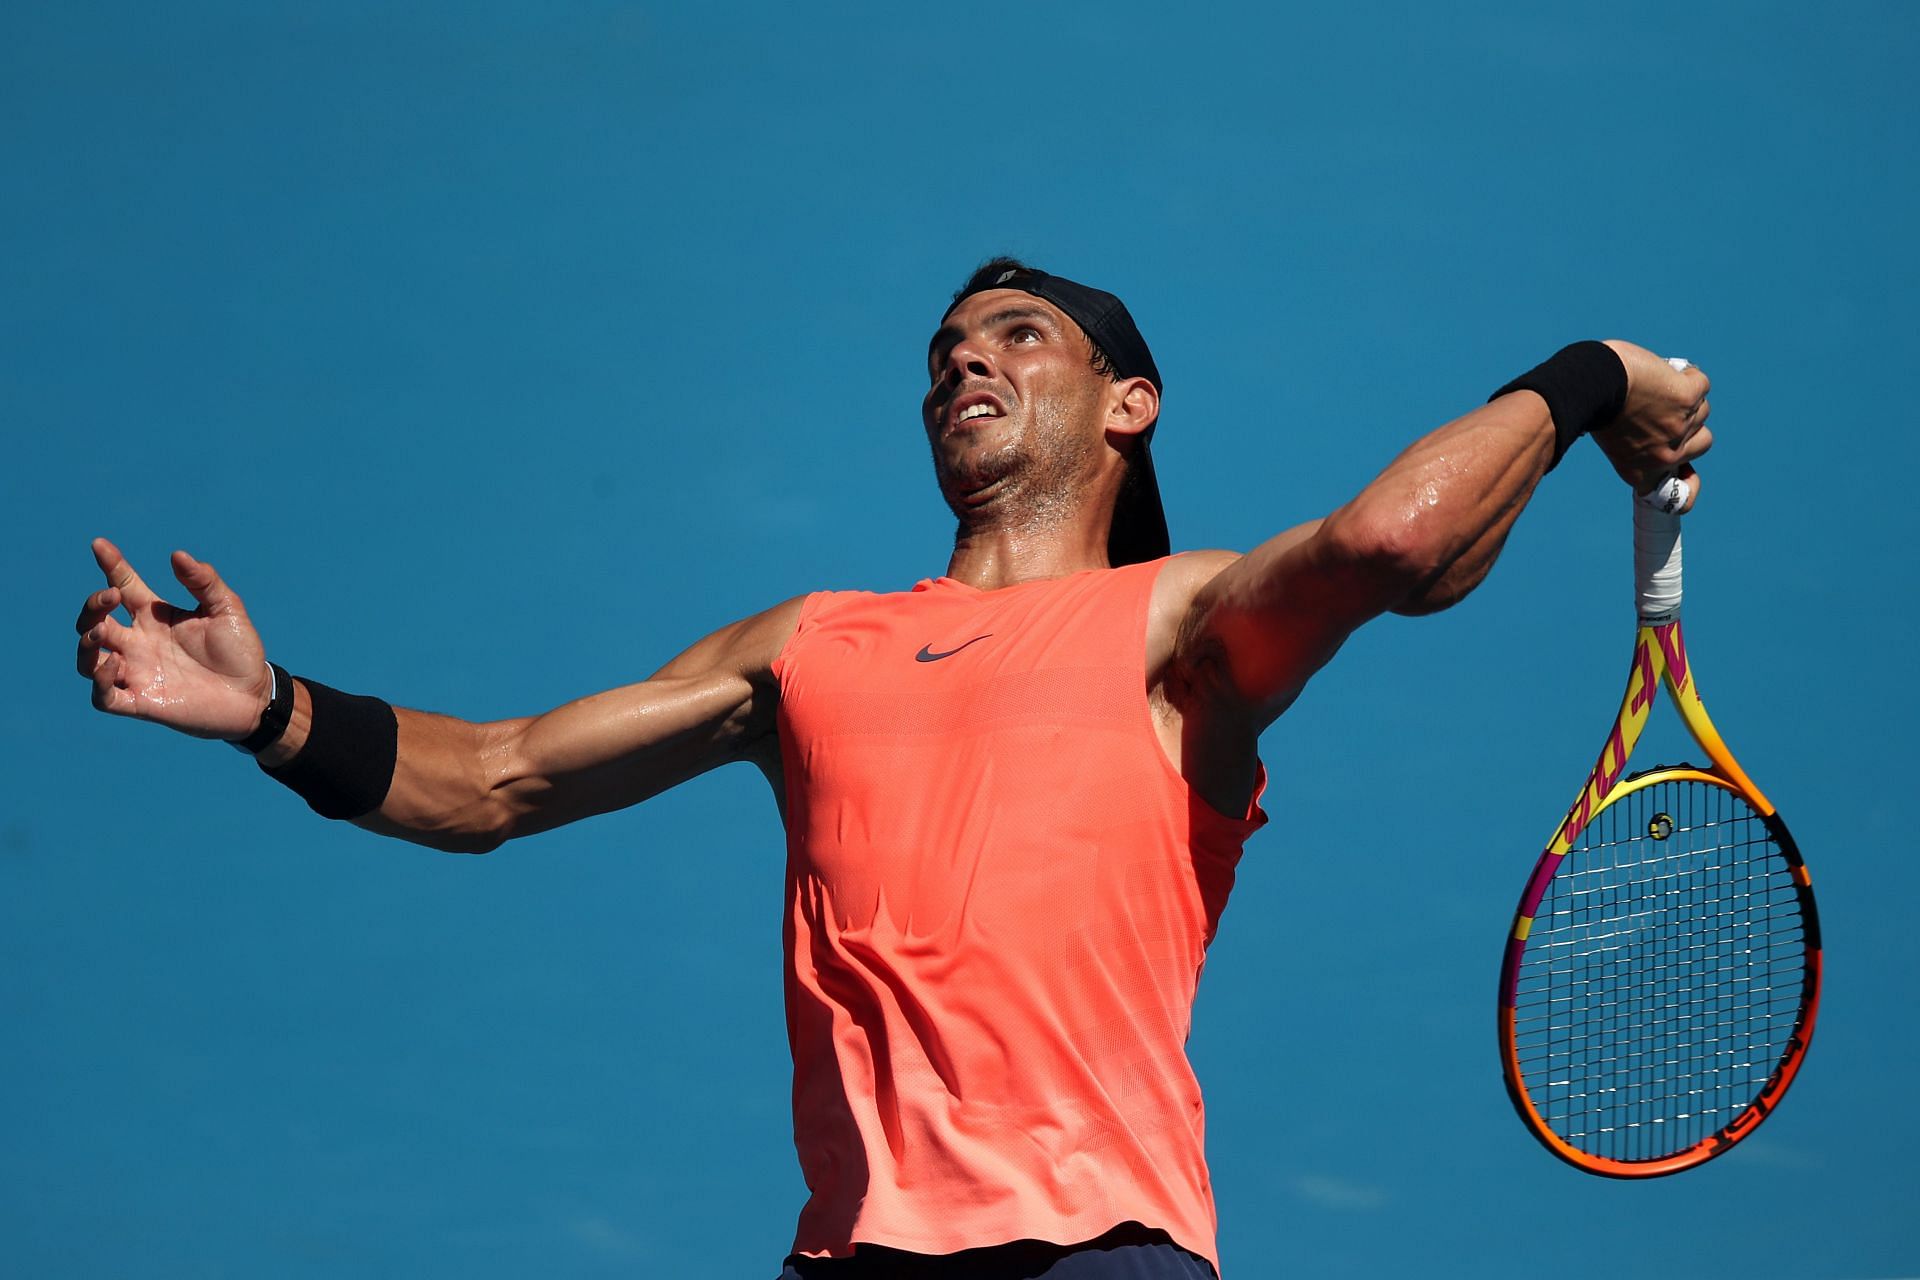 Rafael Nadal practicing ahead of the 2022 Australian Open